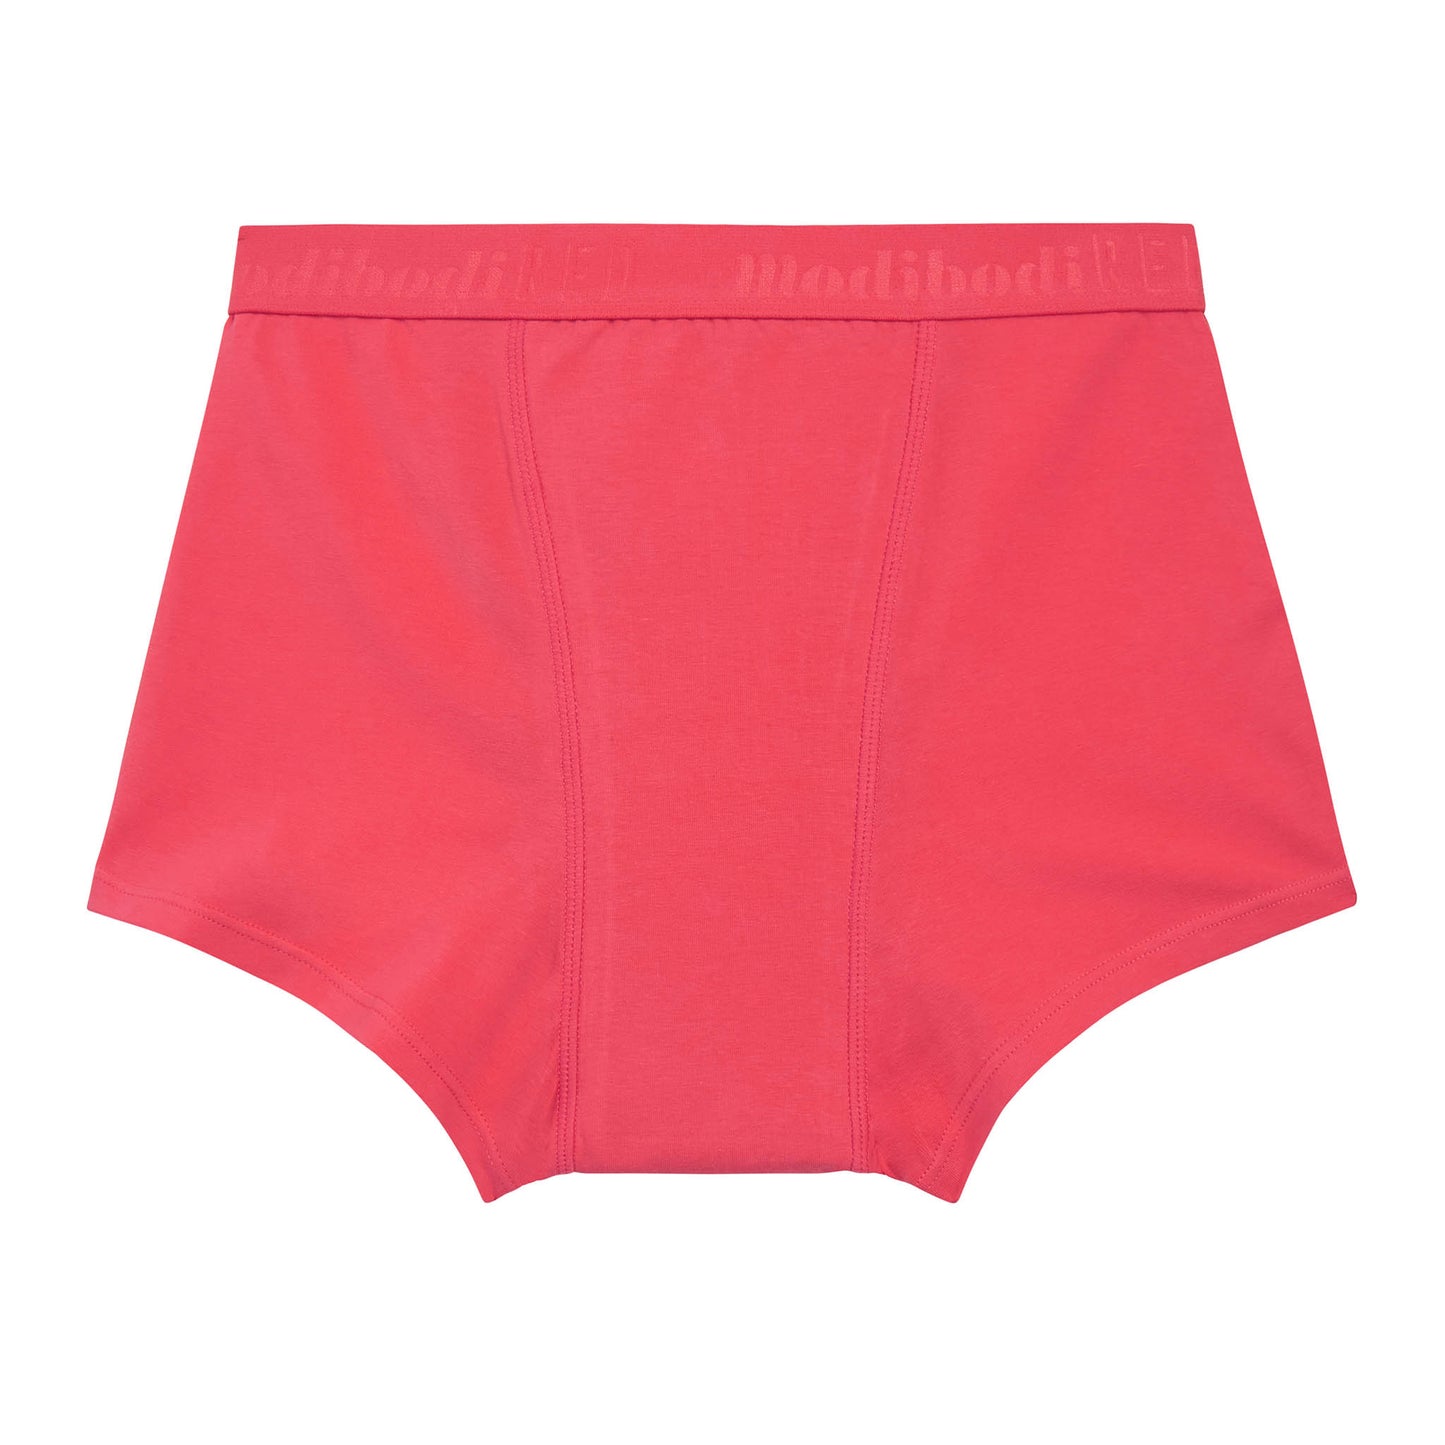 Modibodi period underwear boyshort sorbet colour